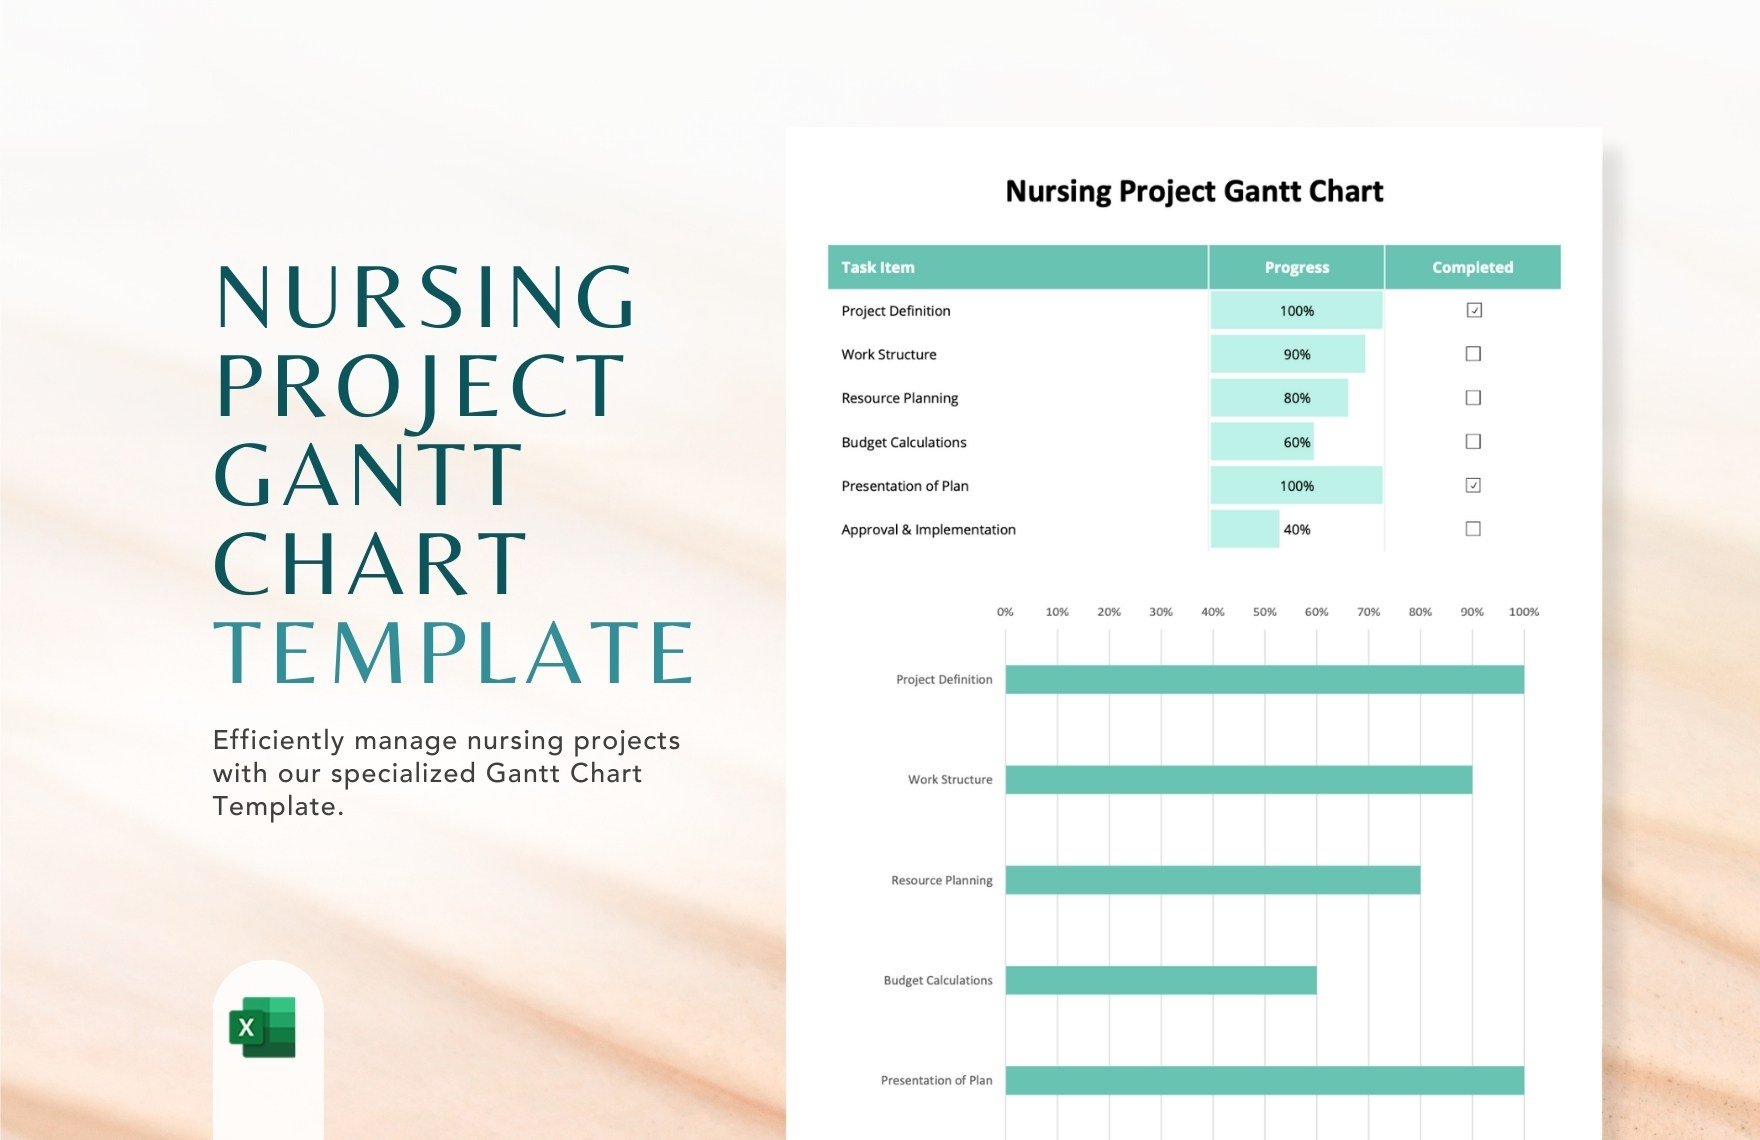 Nursing Project Gantt Chart Template in Excel